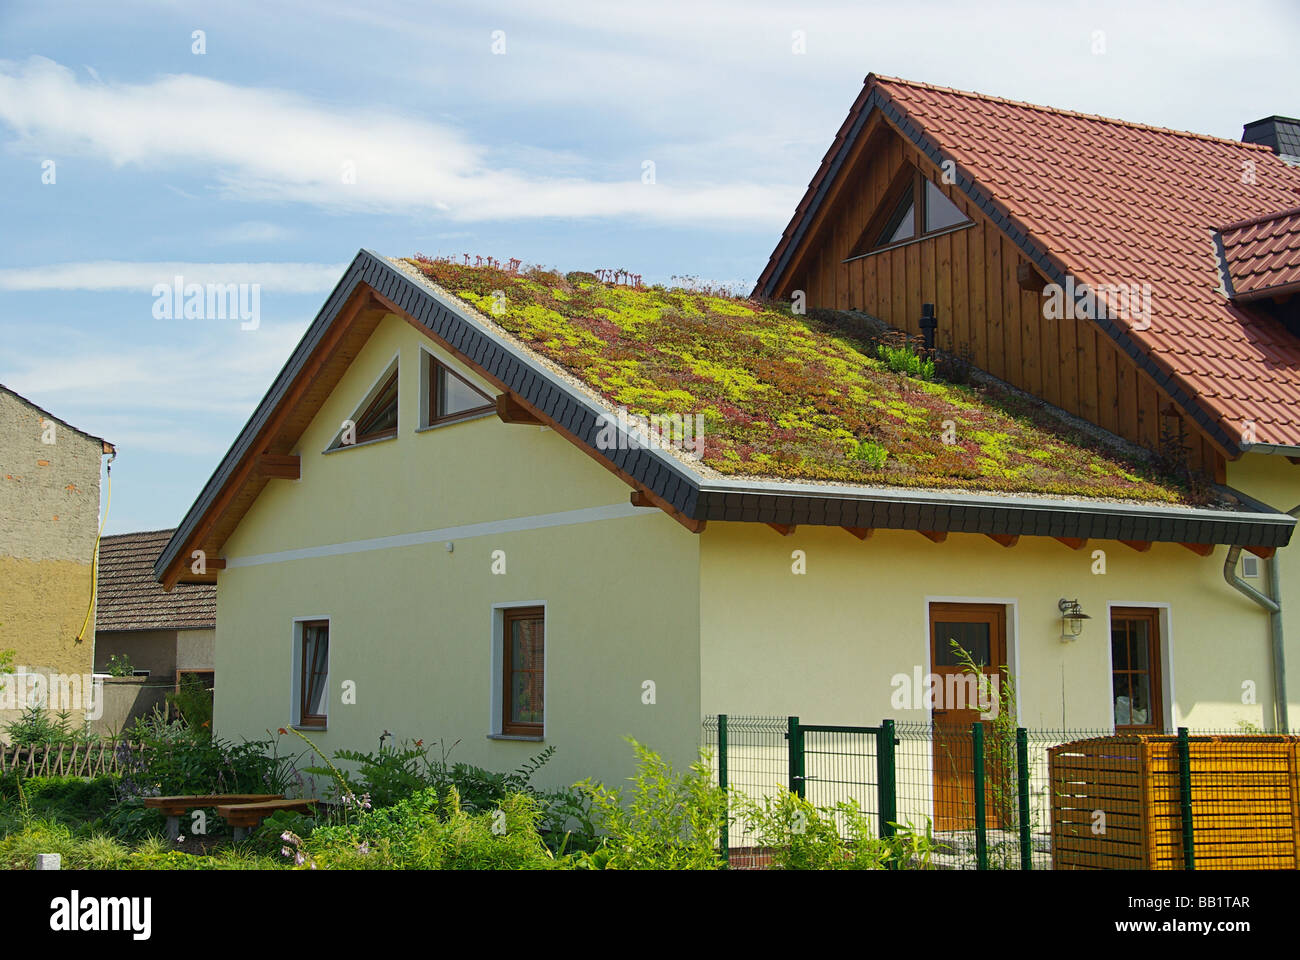 Gründach green roof 02 Stock Photo